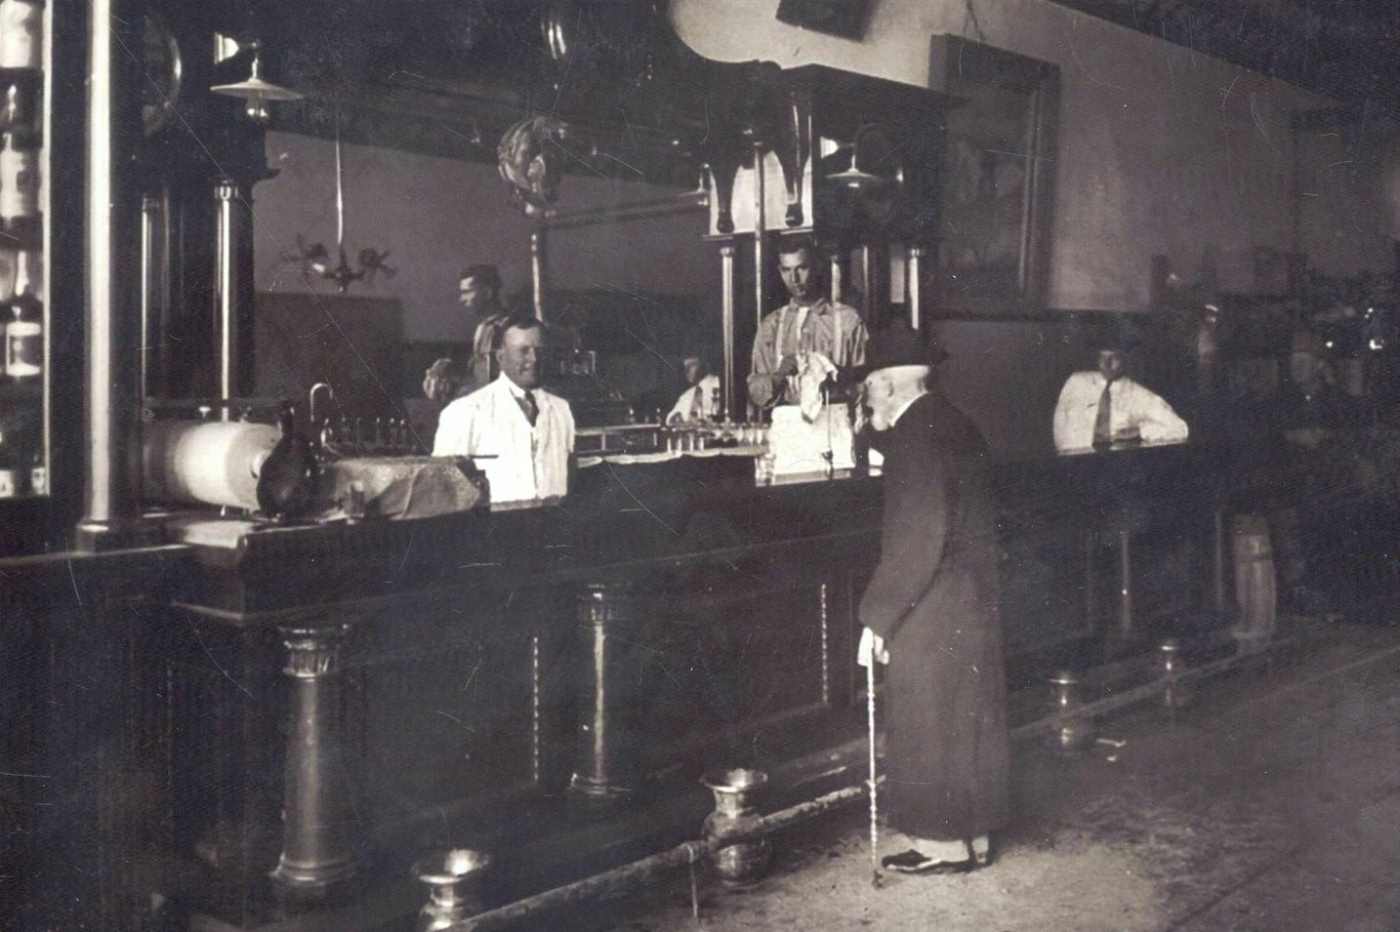 Inside the Legal Tender Saloon in Menard in the 1920s